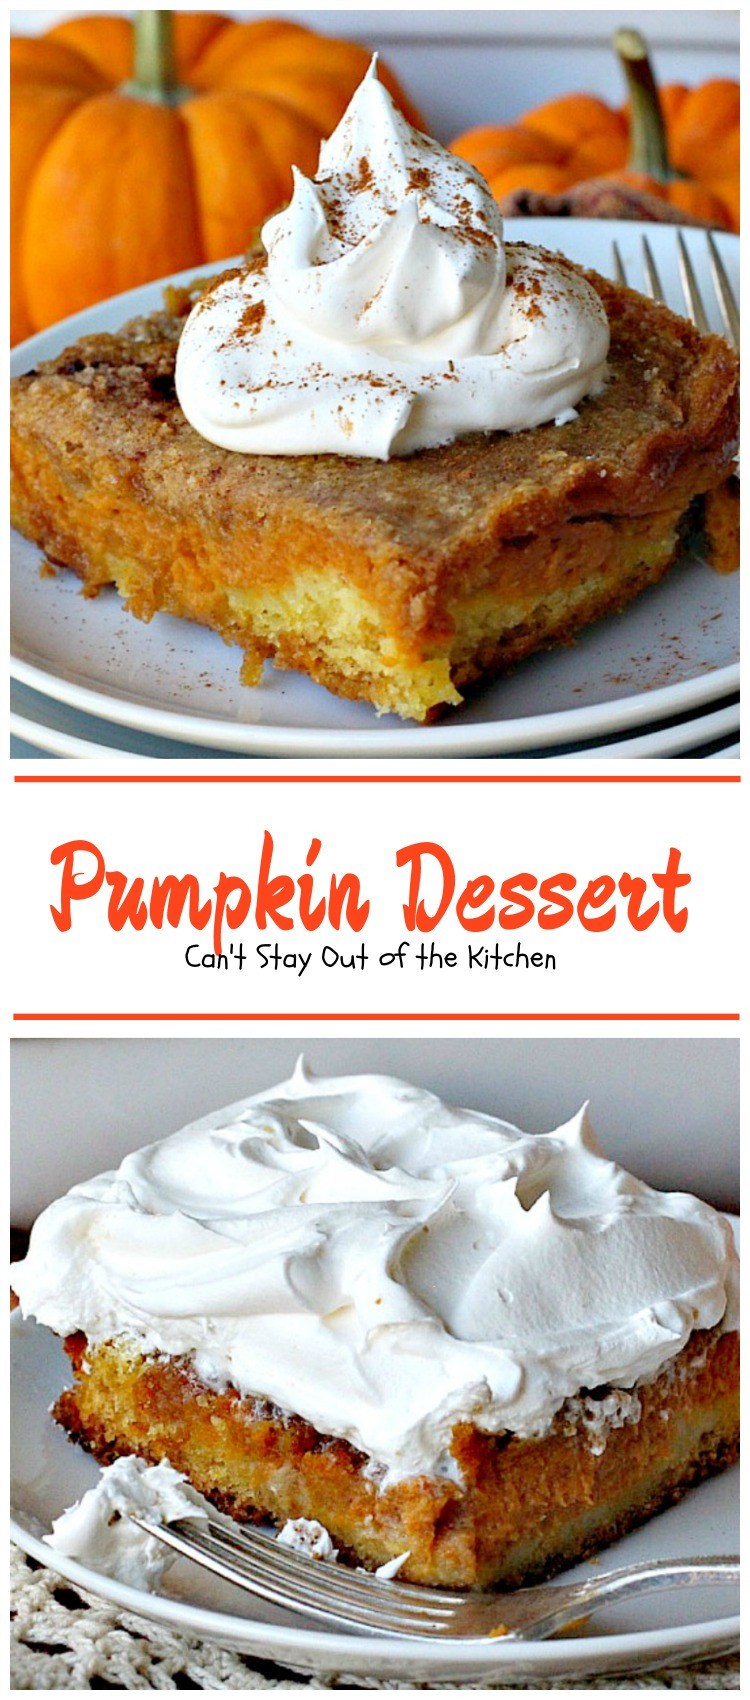 Pumpkin Spice Desserts
 Pumpkin Pie Crust Cinnamon Rolls Can t Stay Out of the